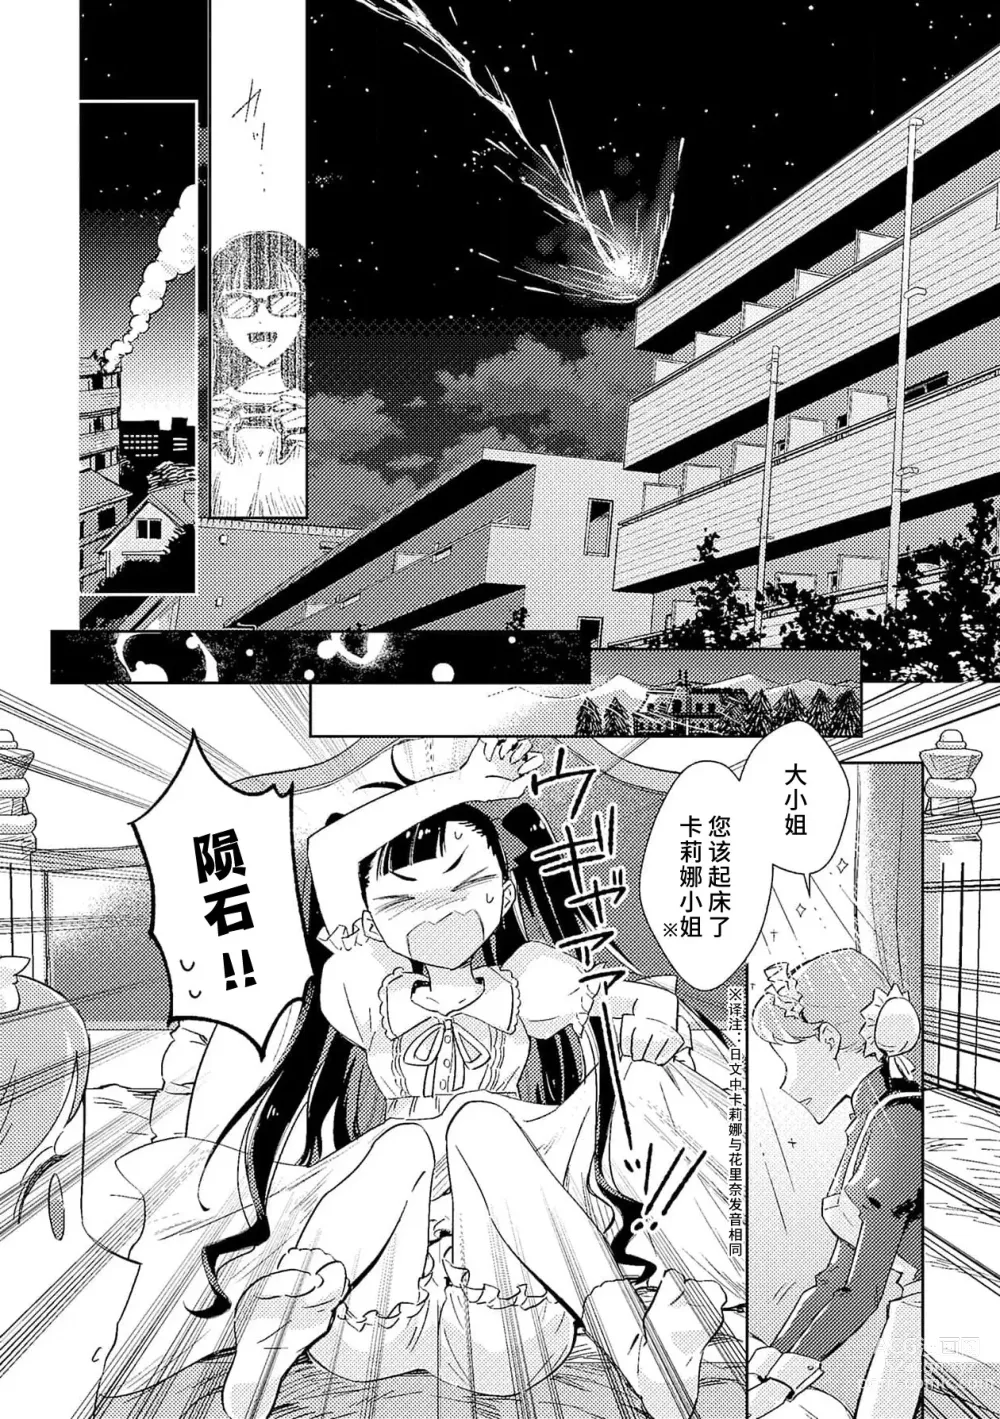 Page 5 of manga 身为恶役千金，堕落于魔界王子身下这条路线真的可以有？ 1-7